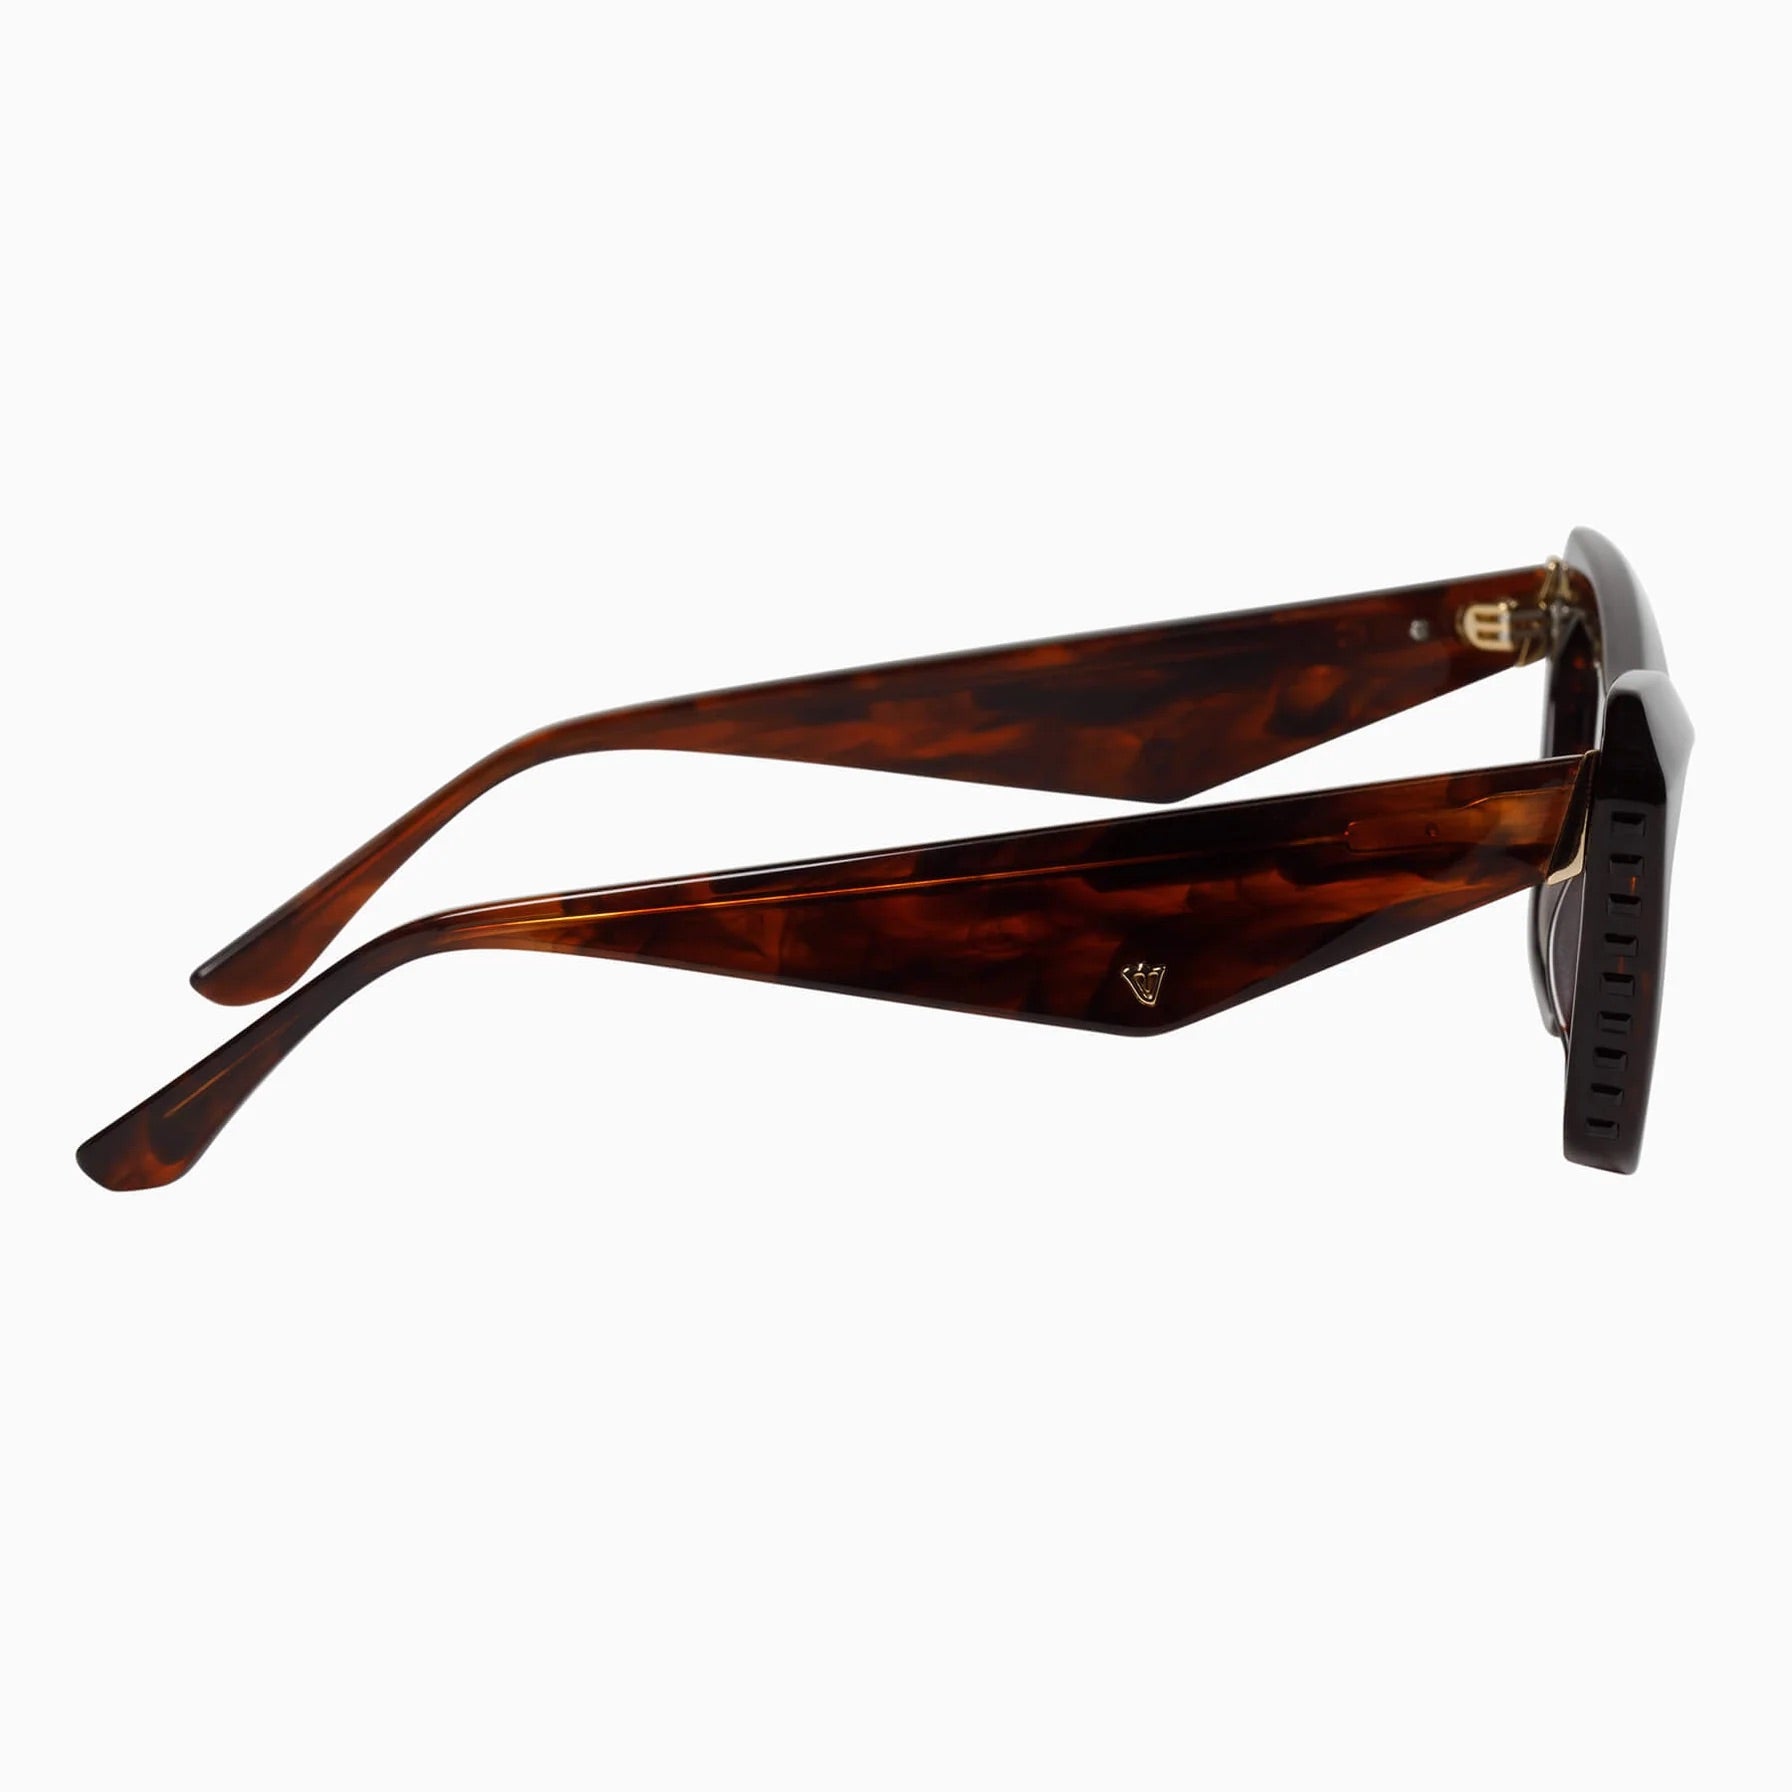 Piaf | Sunglasses - Tobacco Tort w. Black Swarovski Crystals Gold Metal Trim / Brown Gradient Lens